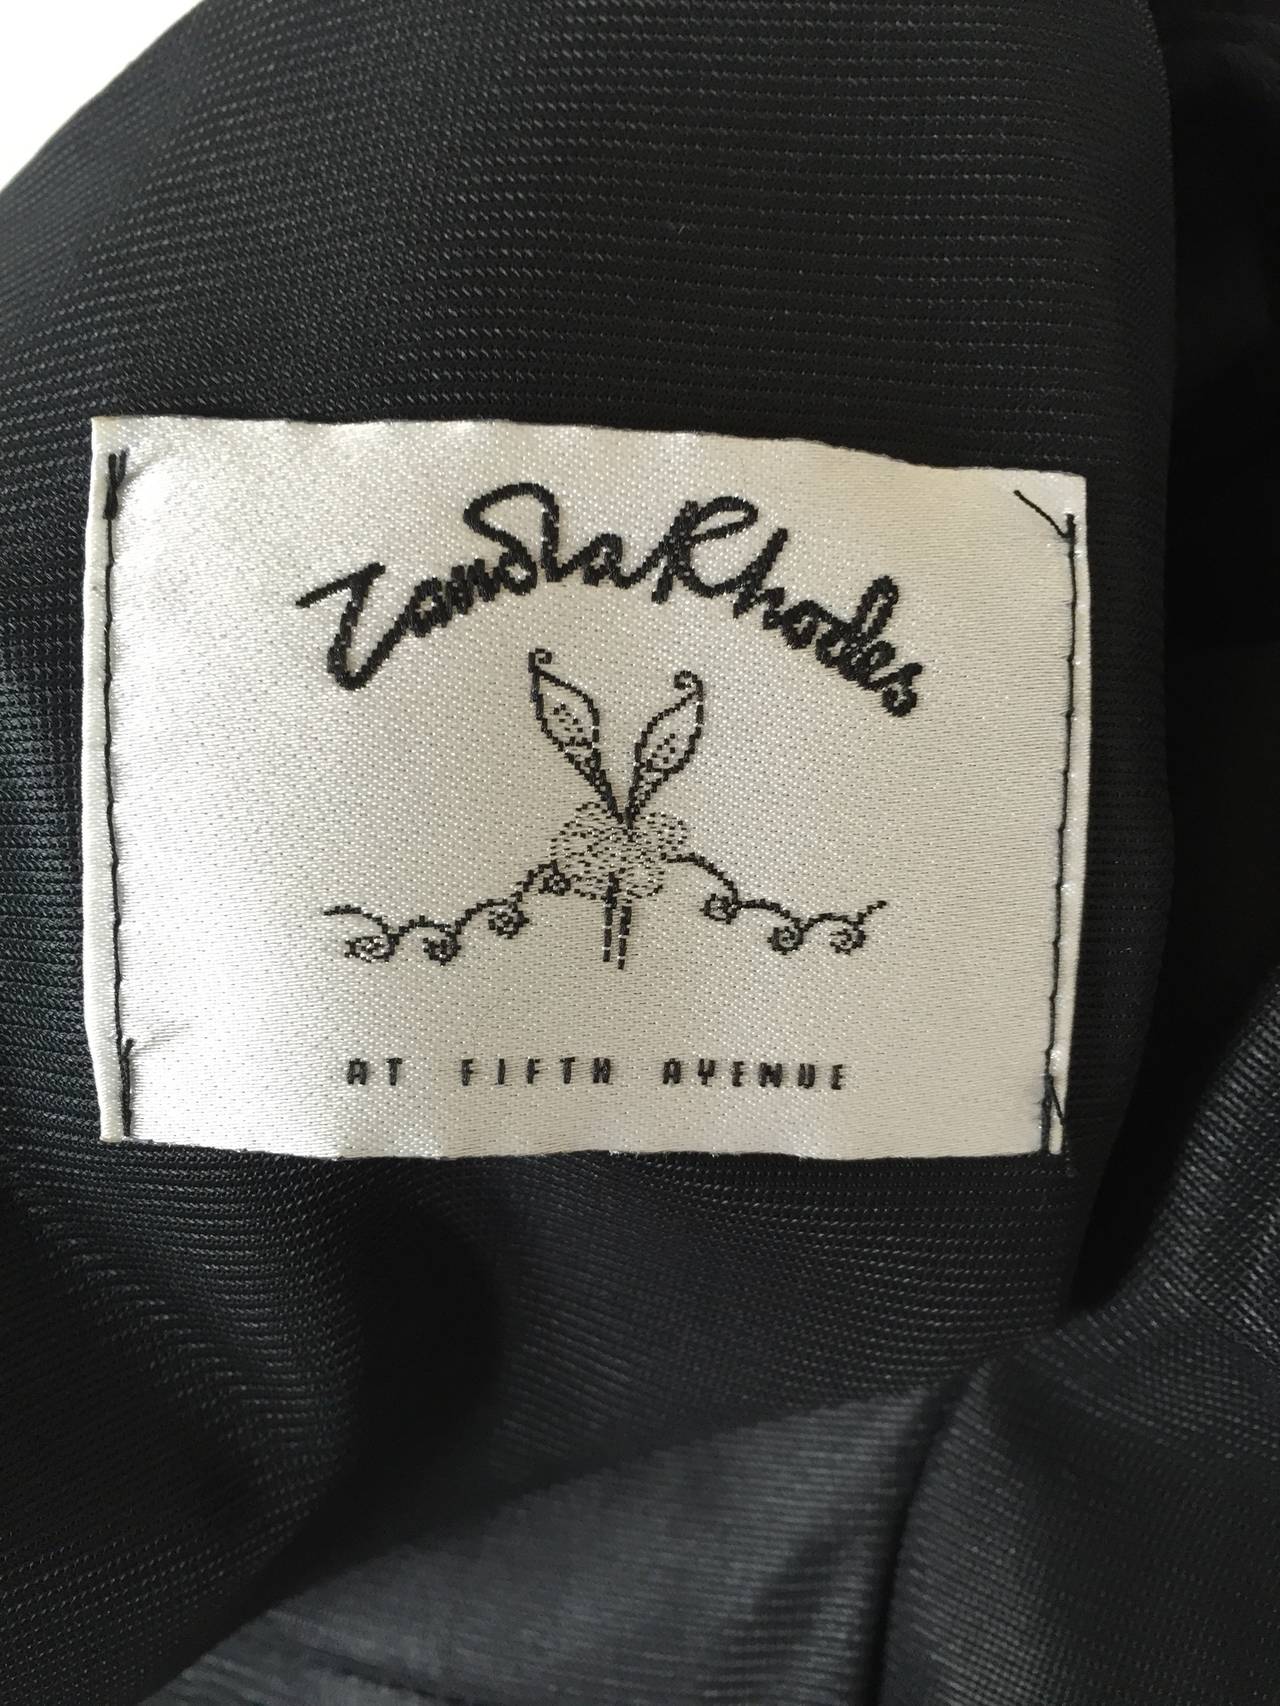 Zandra Rhodes 1980s Black with Sequin Dress Size 6. 6